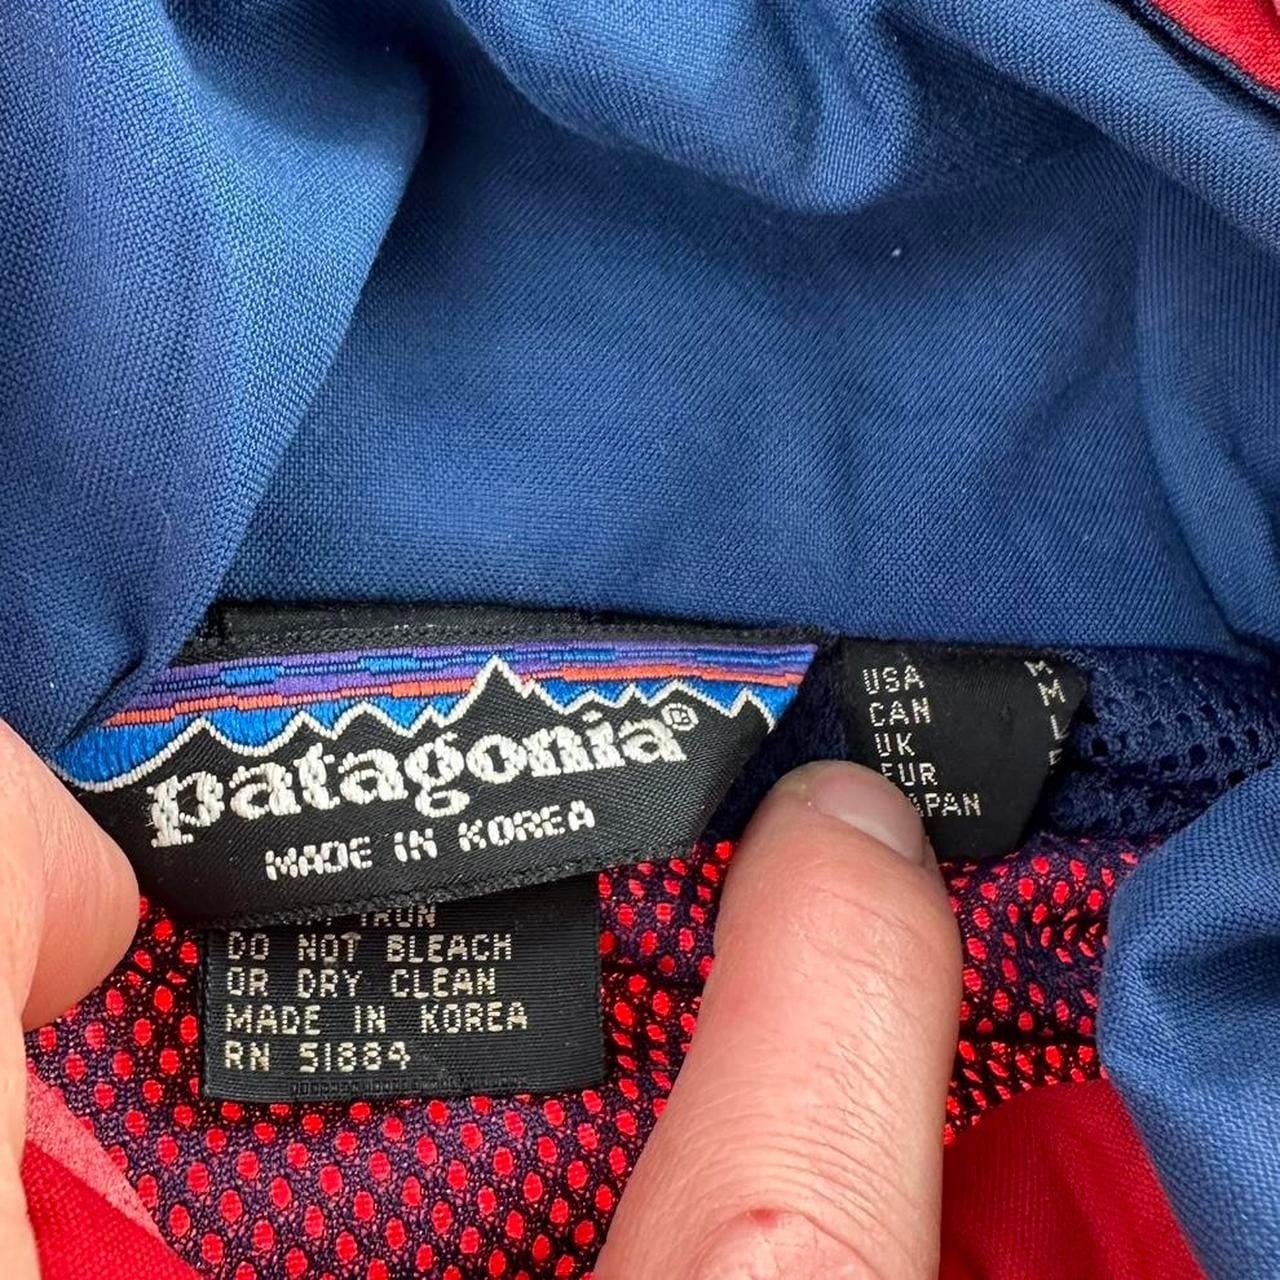 Vintage Patagonia jacket size S - Known Source